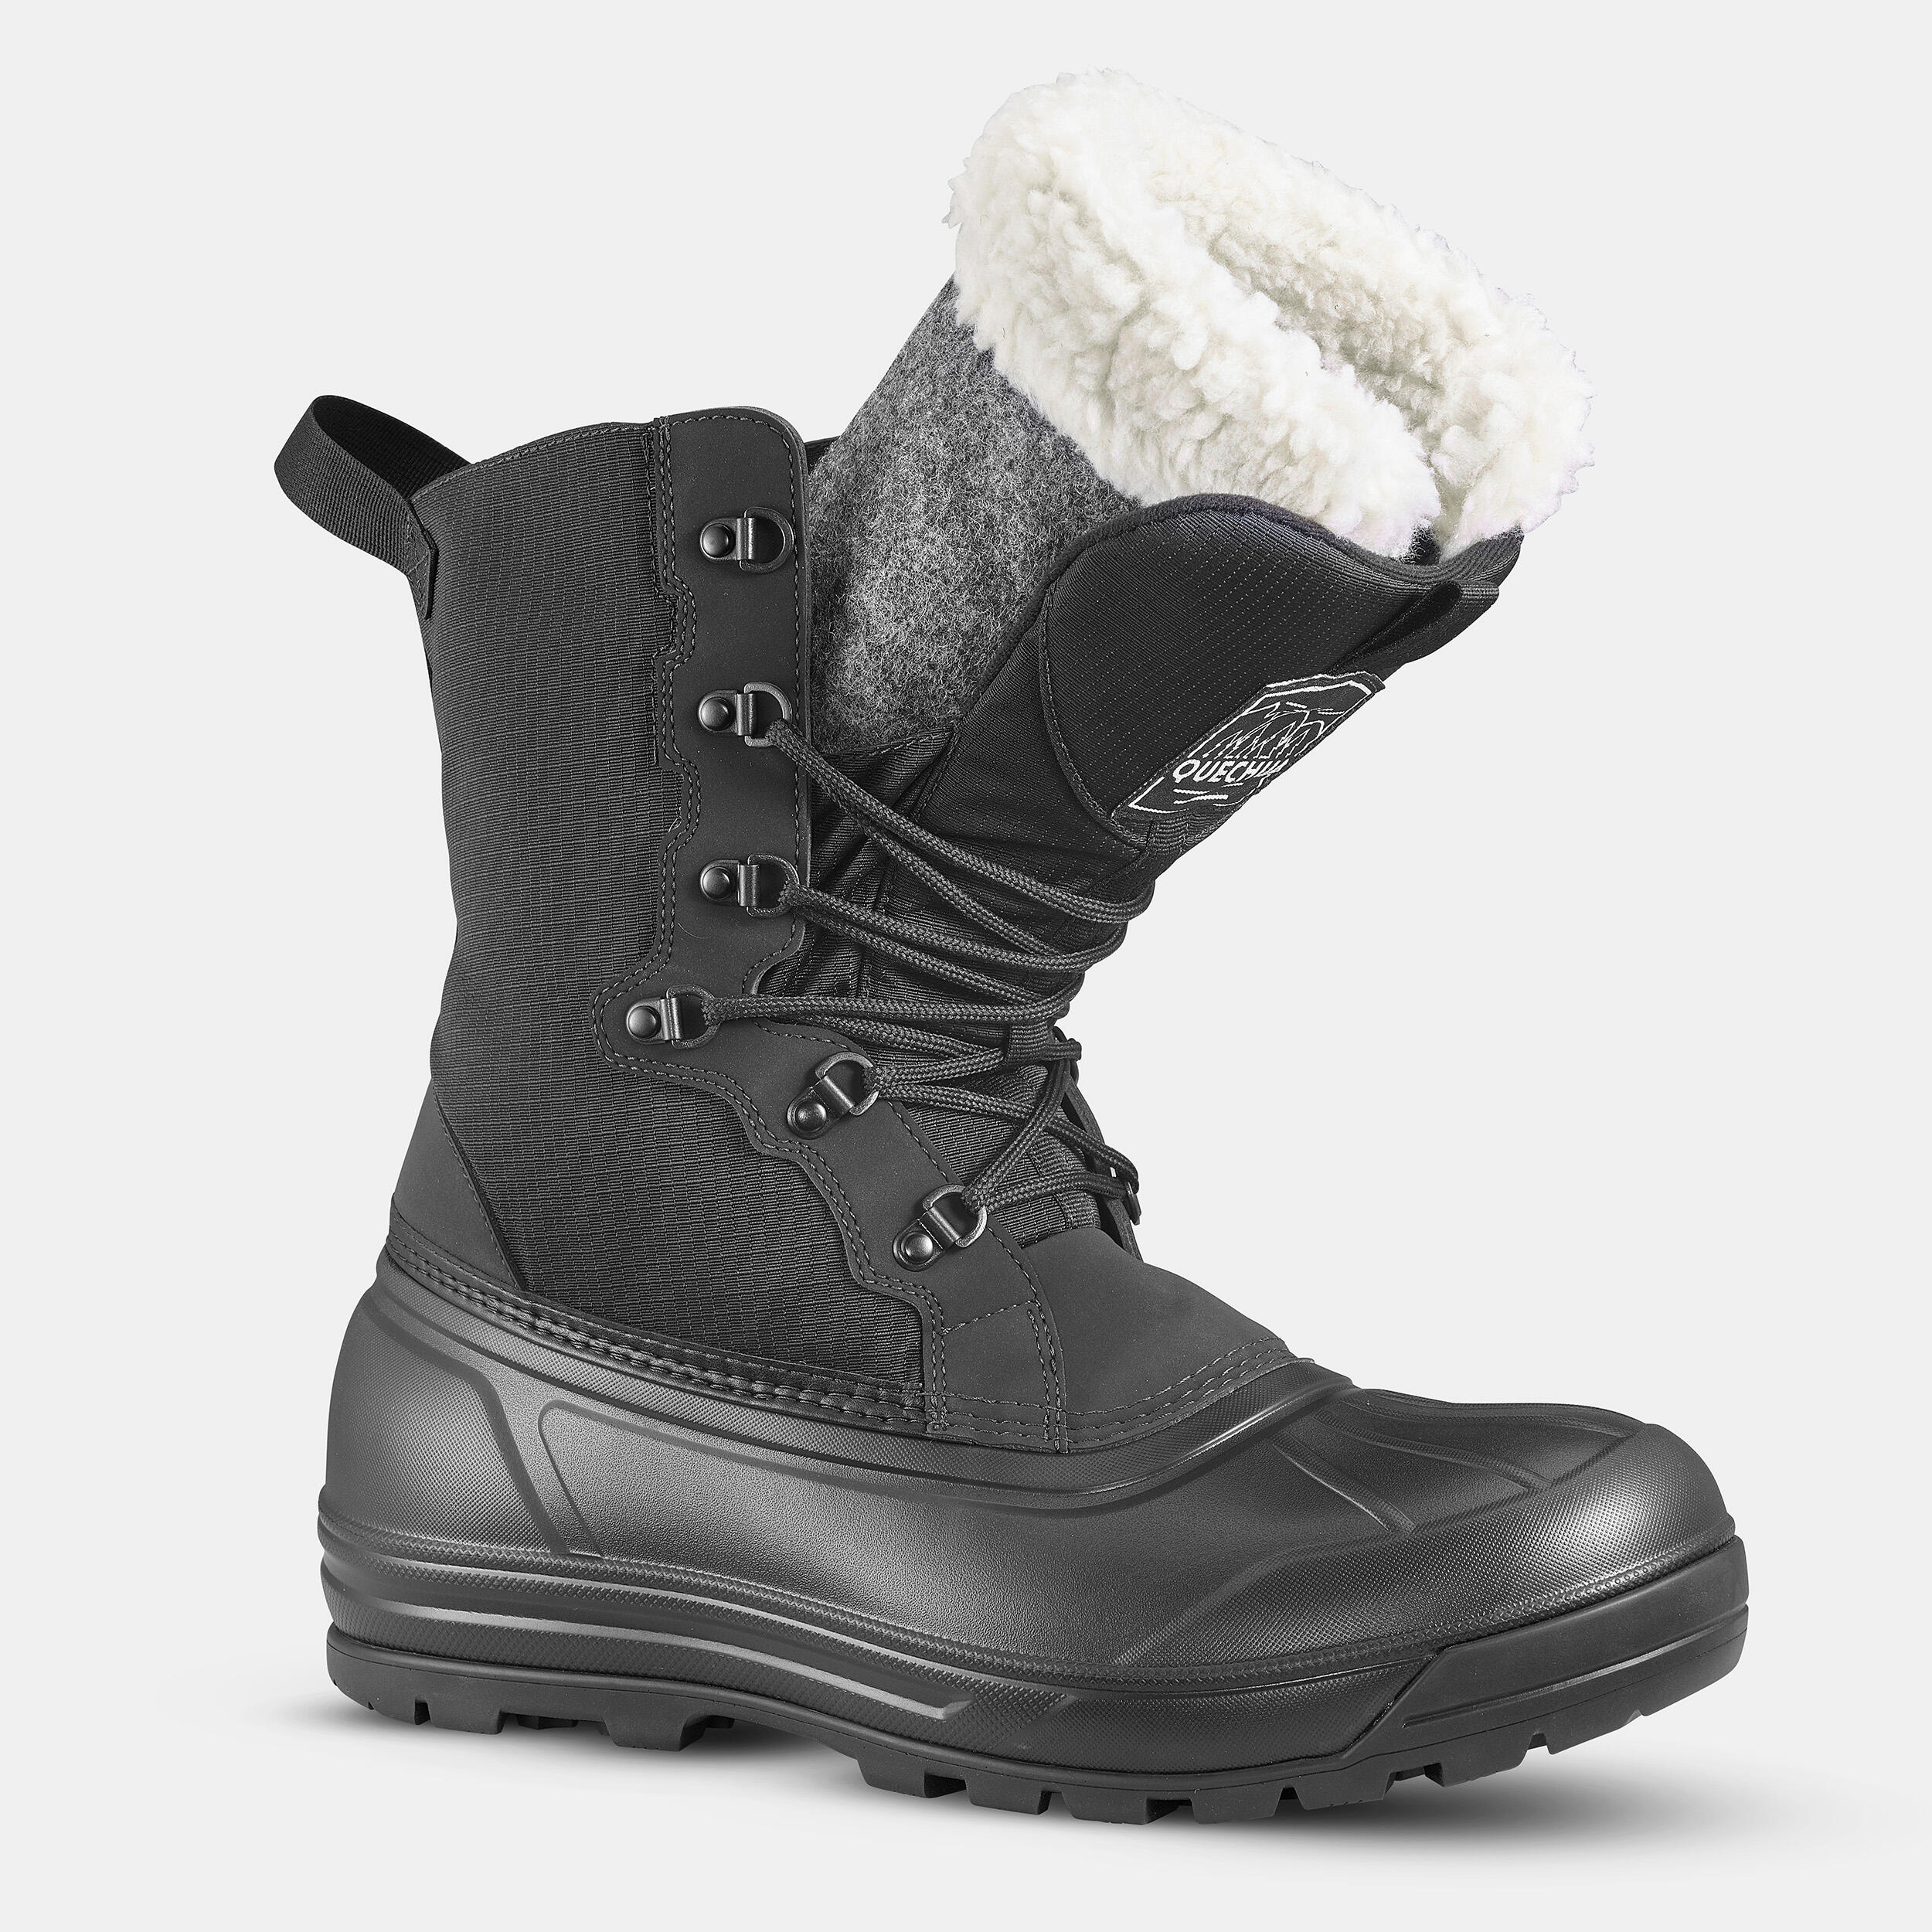 Men’s Warm Waterproof Snow Boots  - SH900 lace-up  6/10